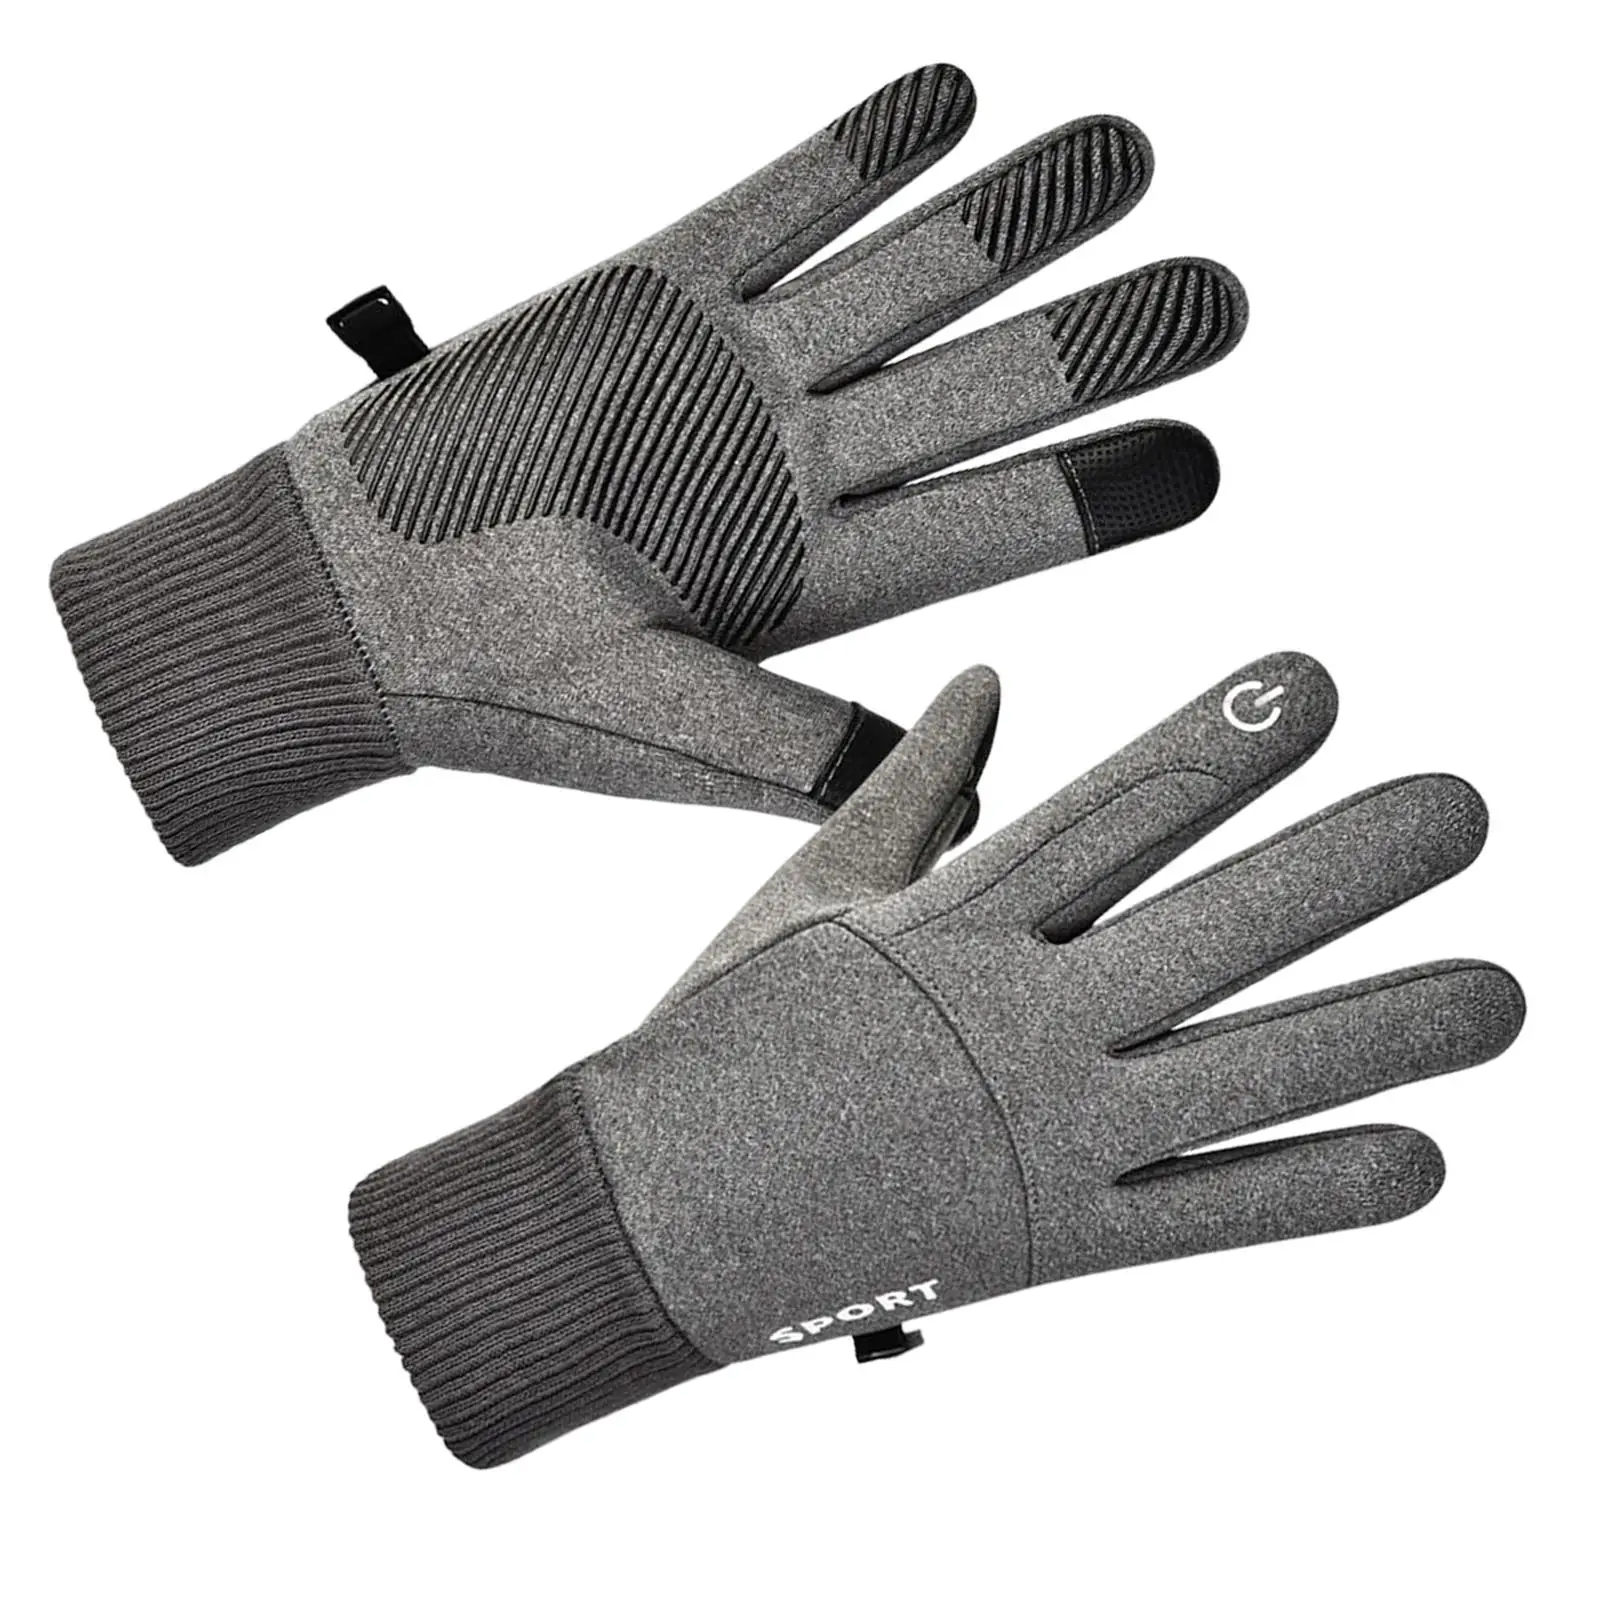 Thermal Gloves Non Slip Durable Winter Gloves for Running Skating Camping